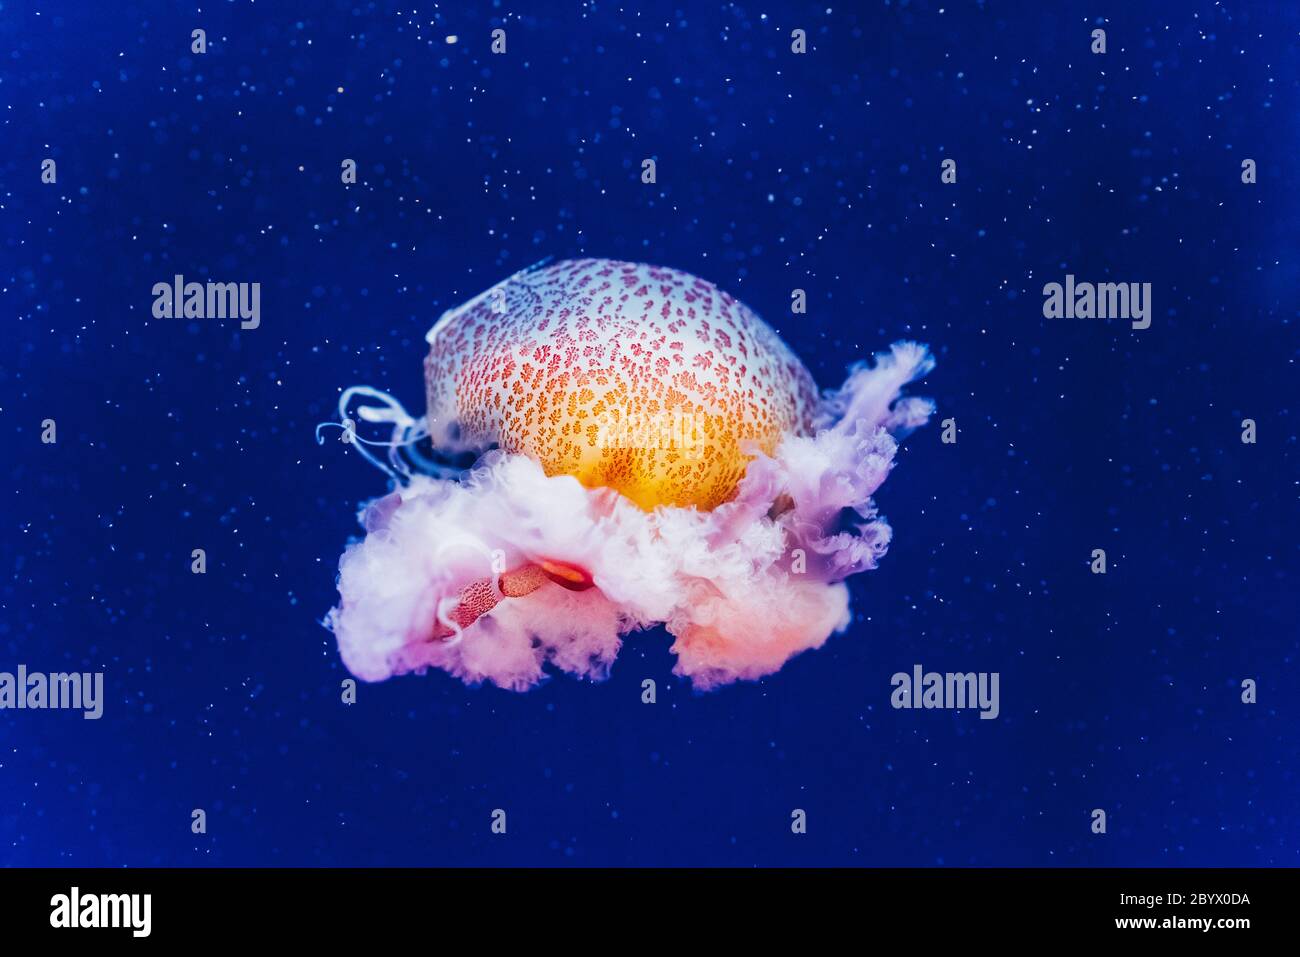 Marine creatures, Medusozoa, jellyfish with jelly-like body and bell shape. Stock Photo